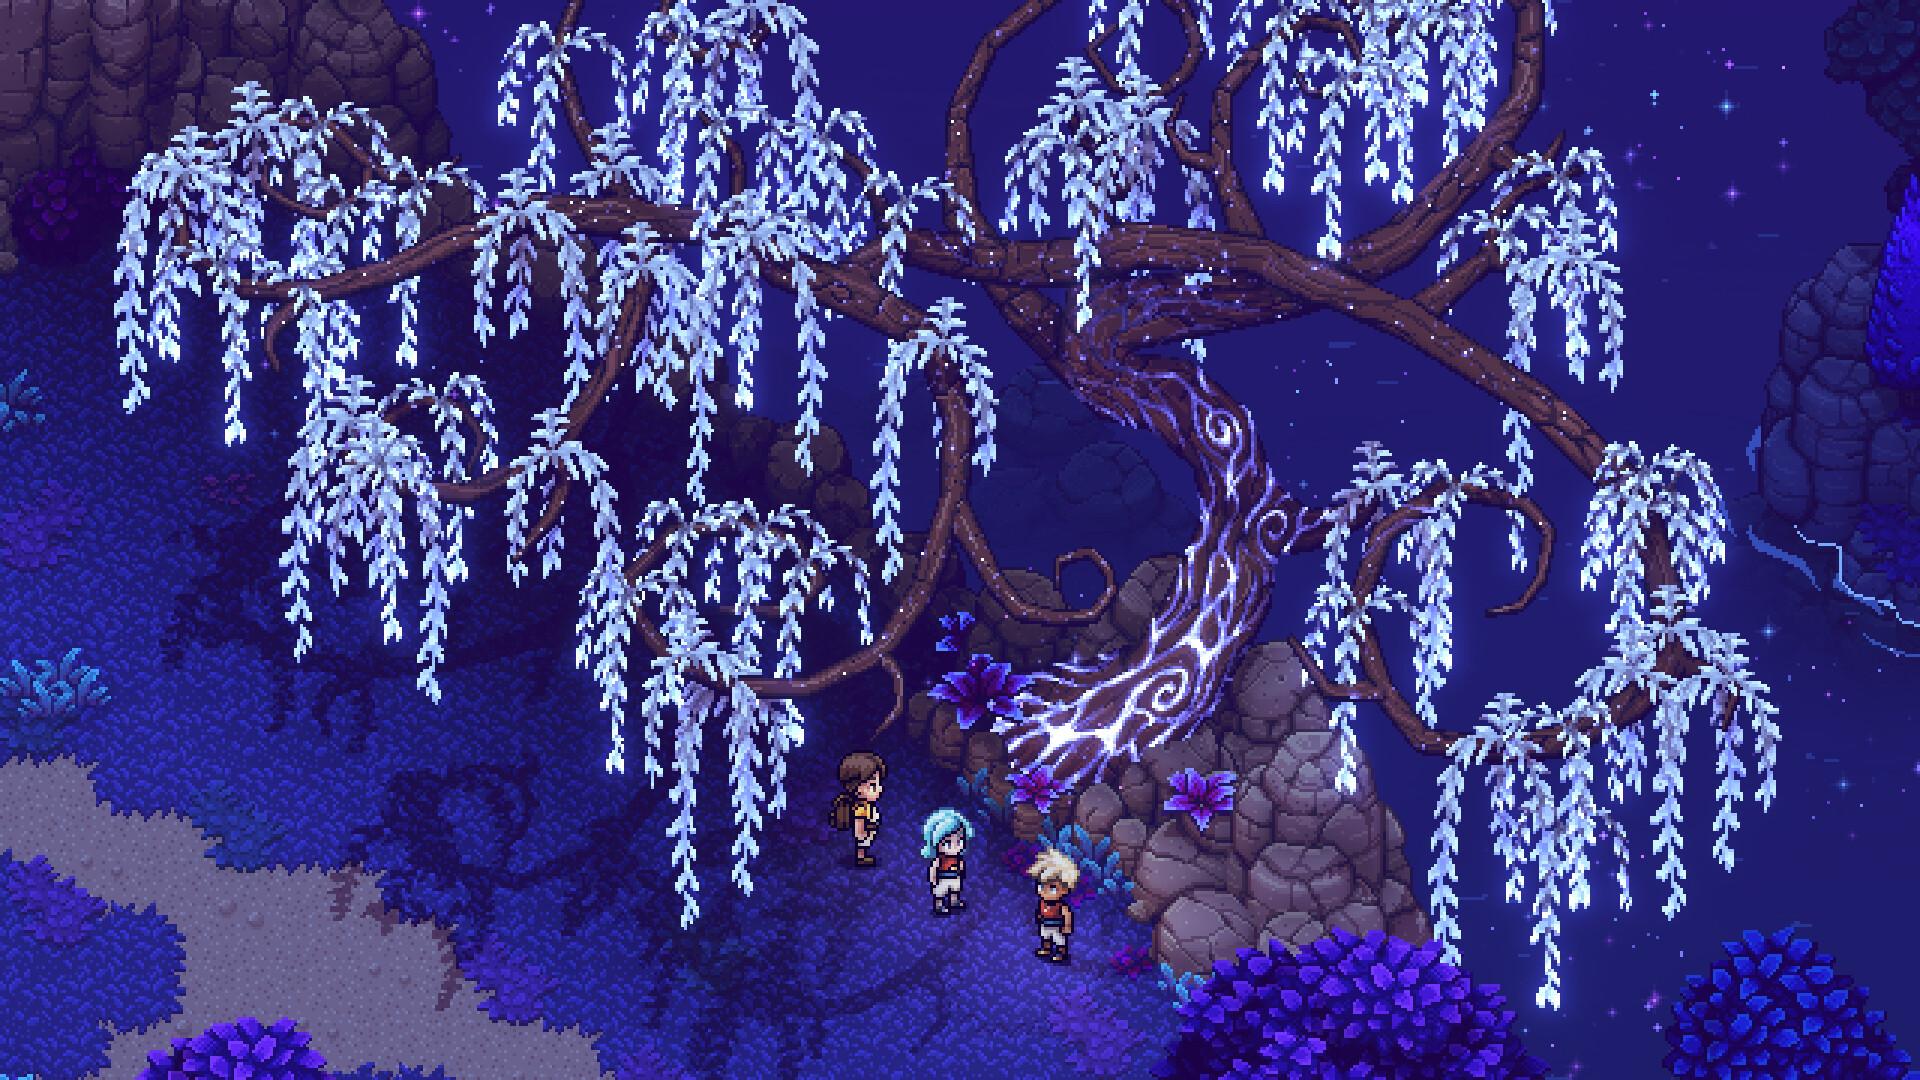 Screenshot №9 from game Sea of Stars